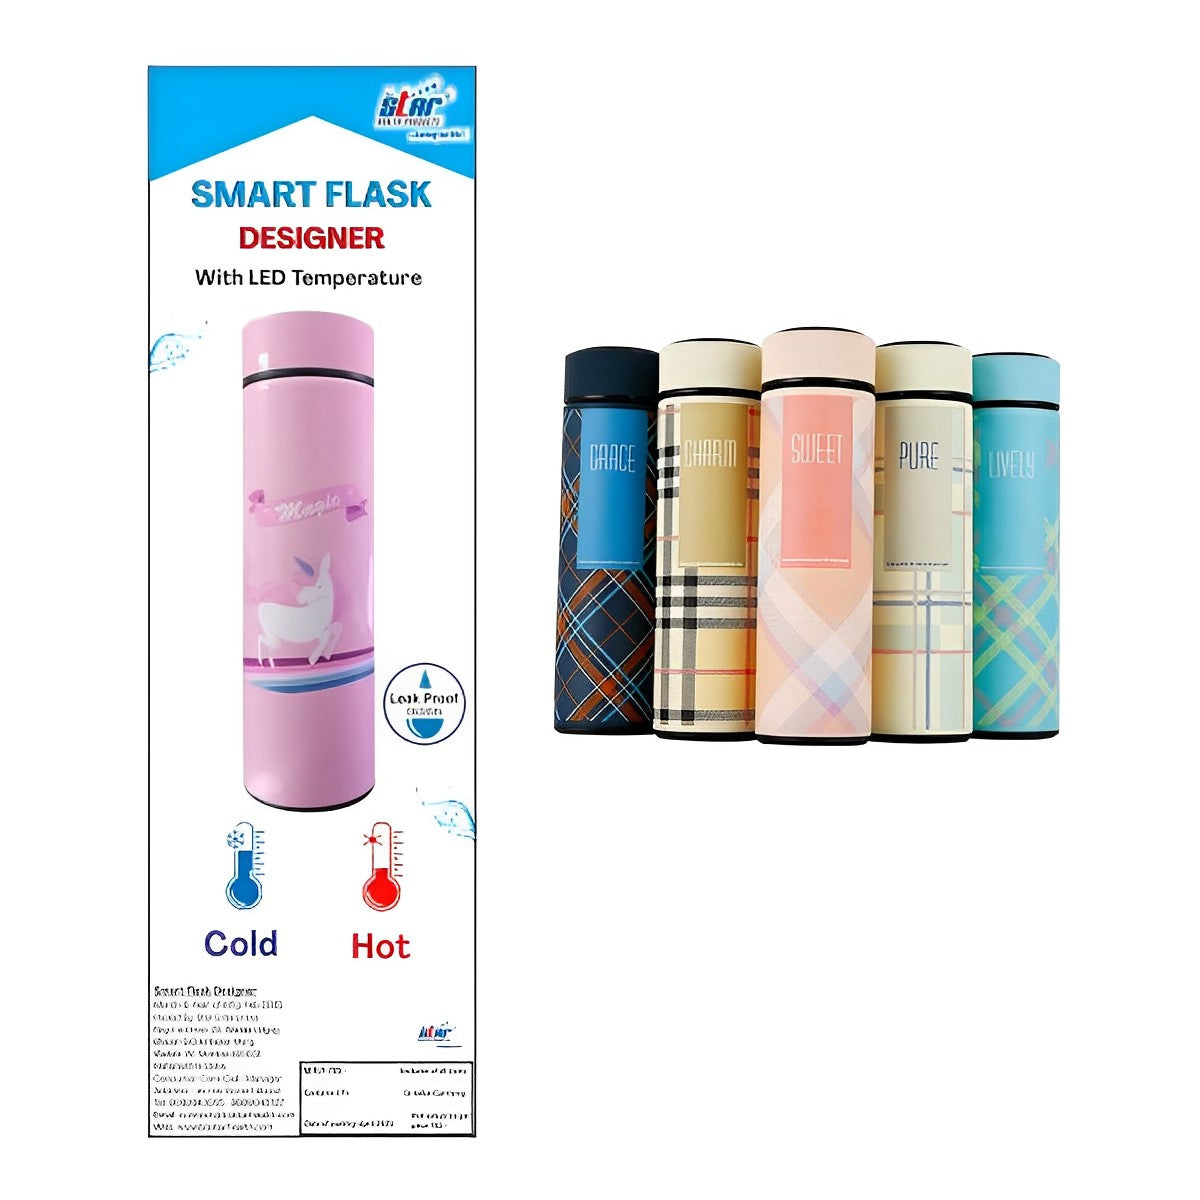 Digital Flask Hot & Cold (Assorted Color & Pattern)